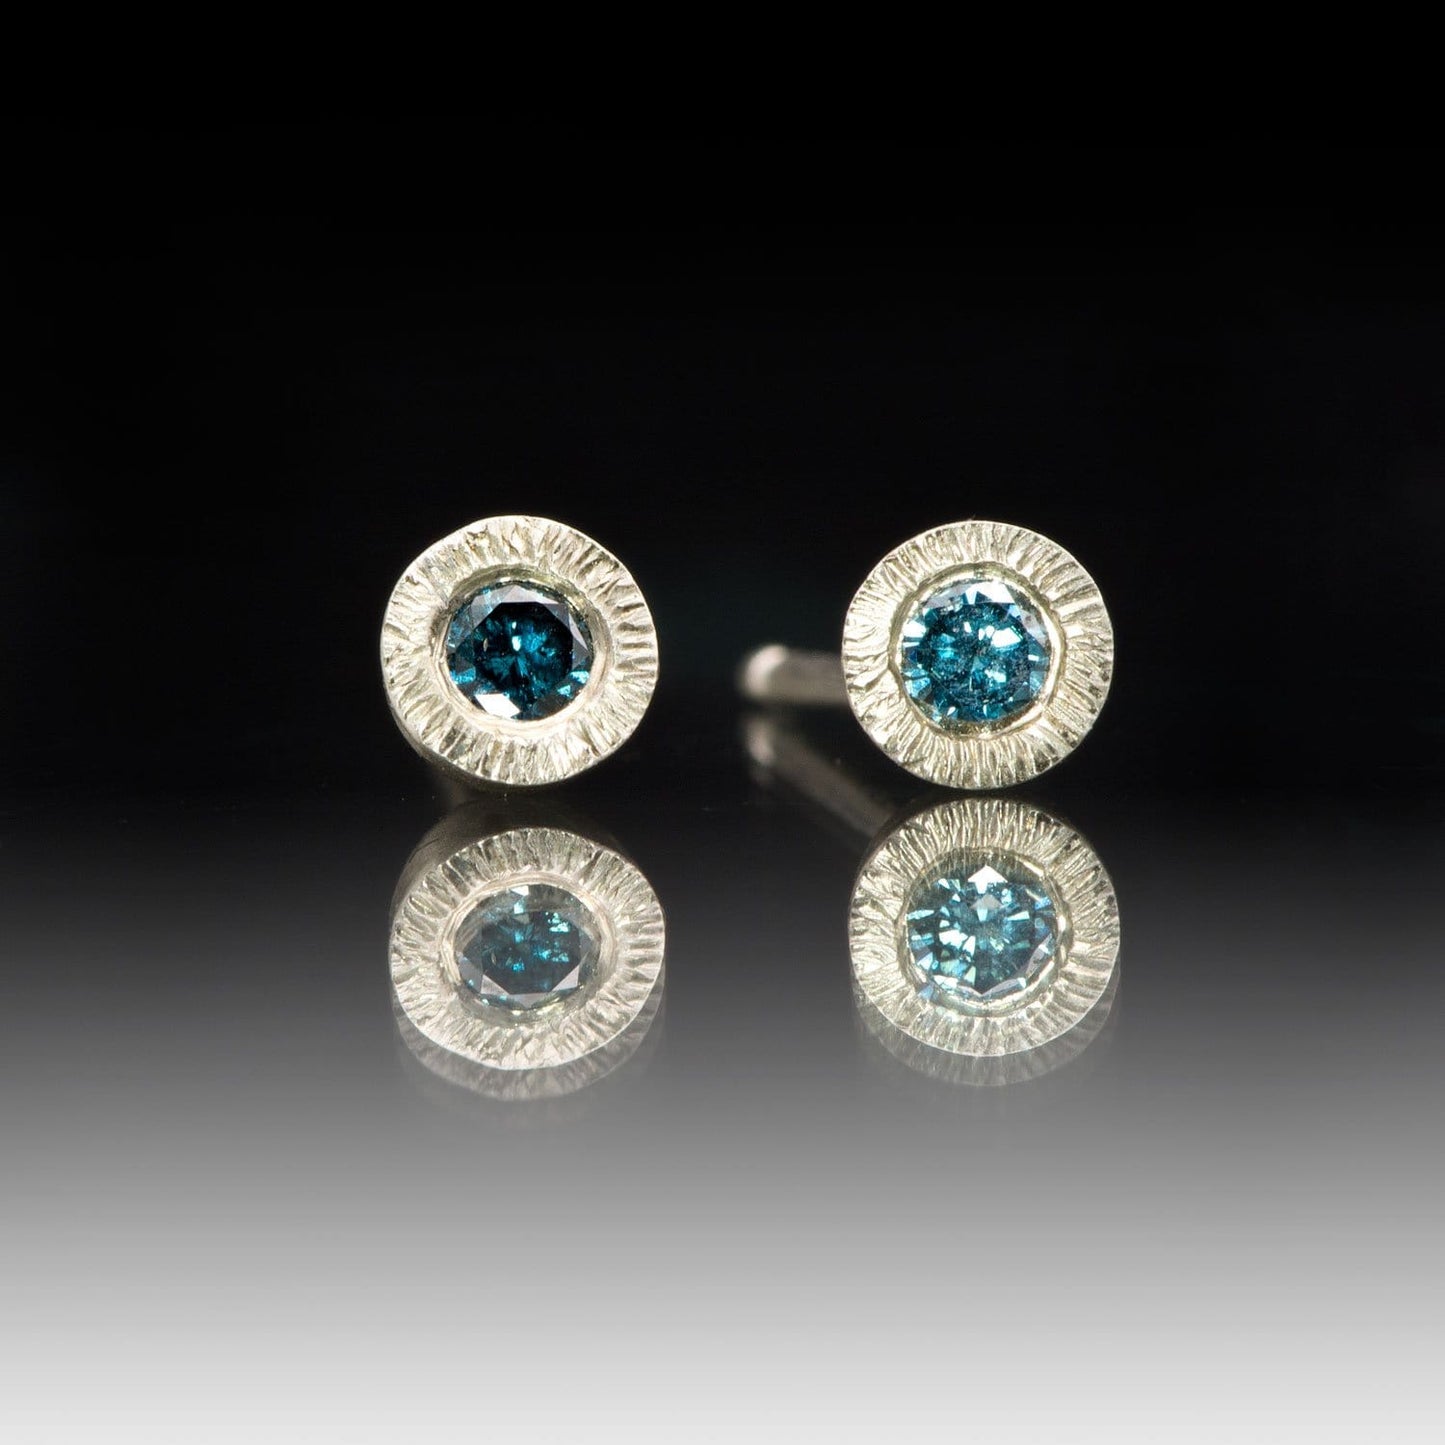 Teal Blue Diamond Tiny Textured Sterling Silver Stud Earrings Sterling Silver Earrings by Nodeform